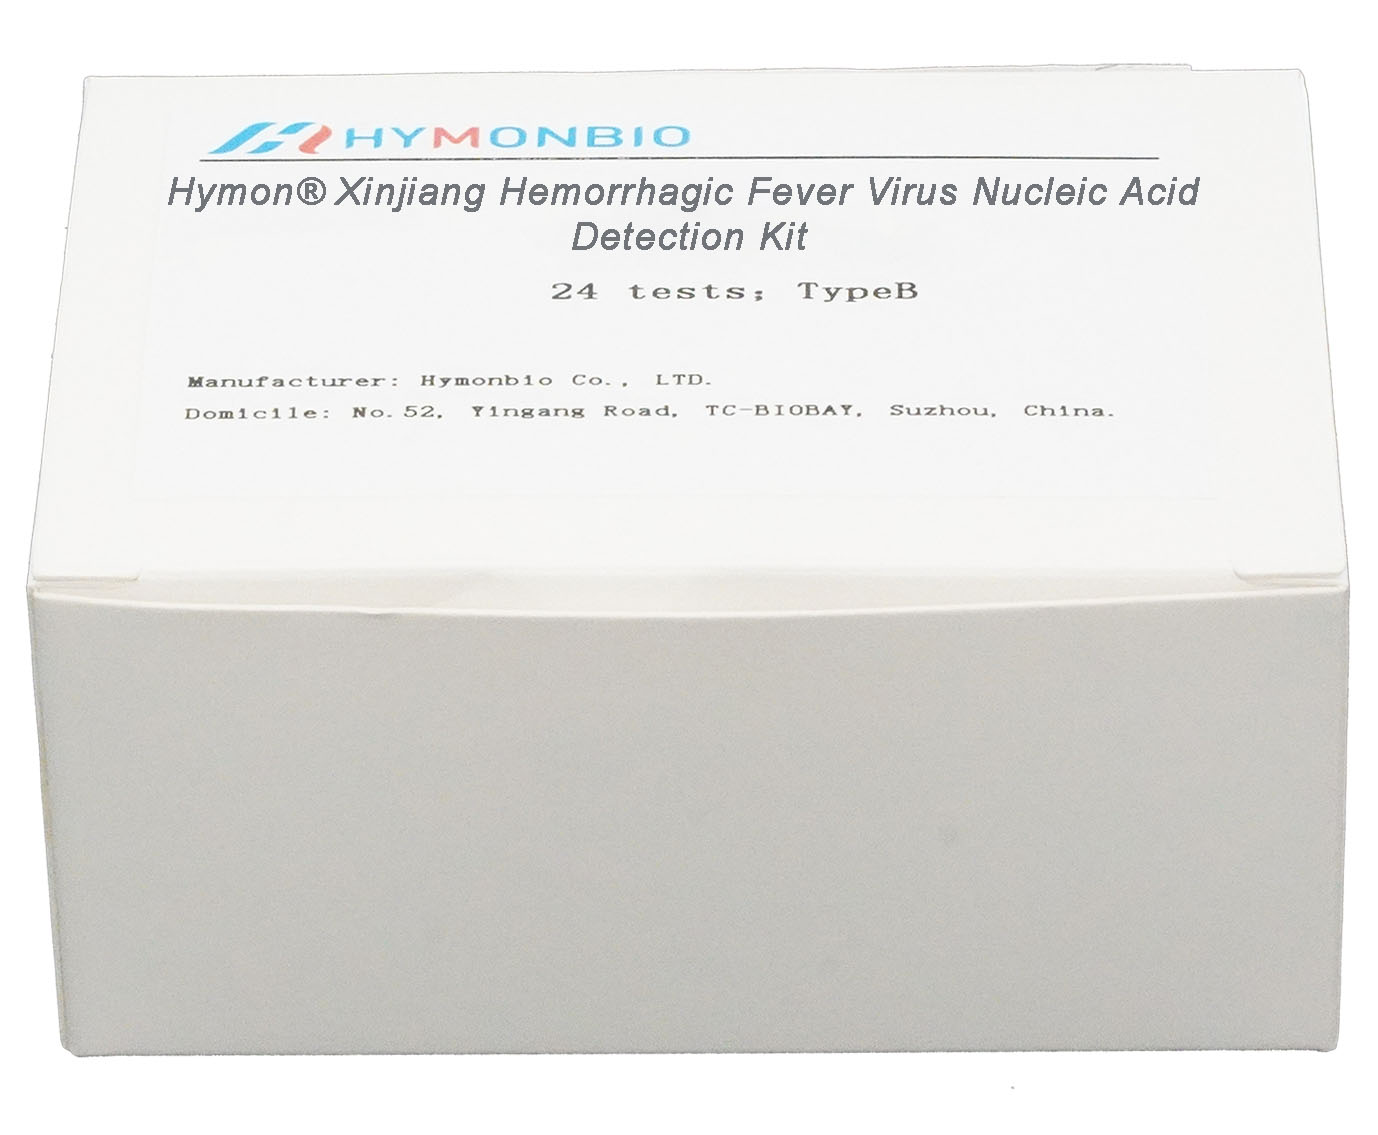 Hymon Xinjiang Hemorrhagic Fever Virus Nucleic Acid Detection Kit